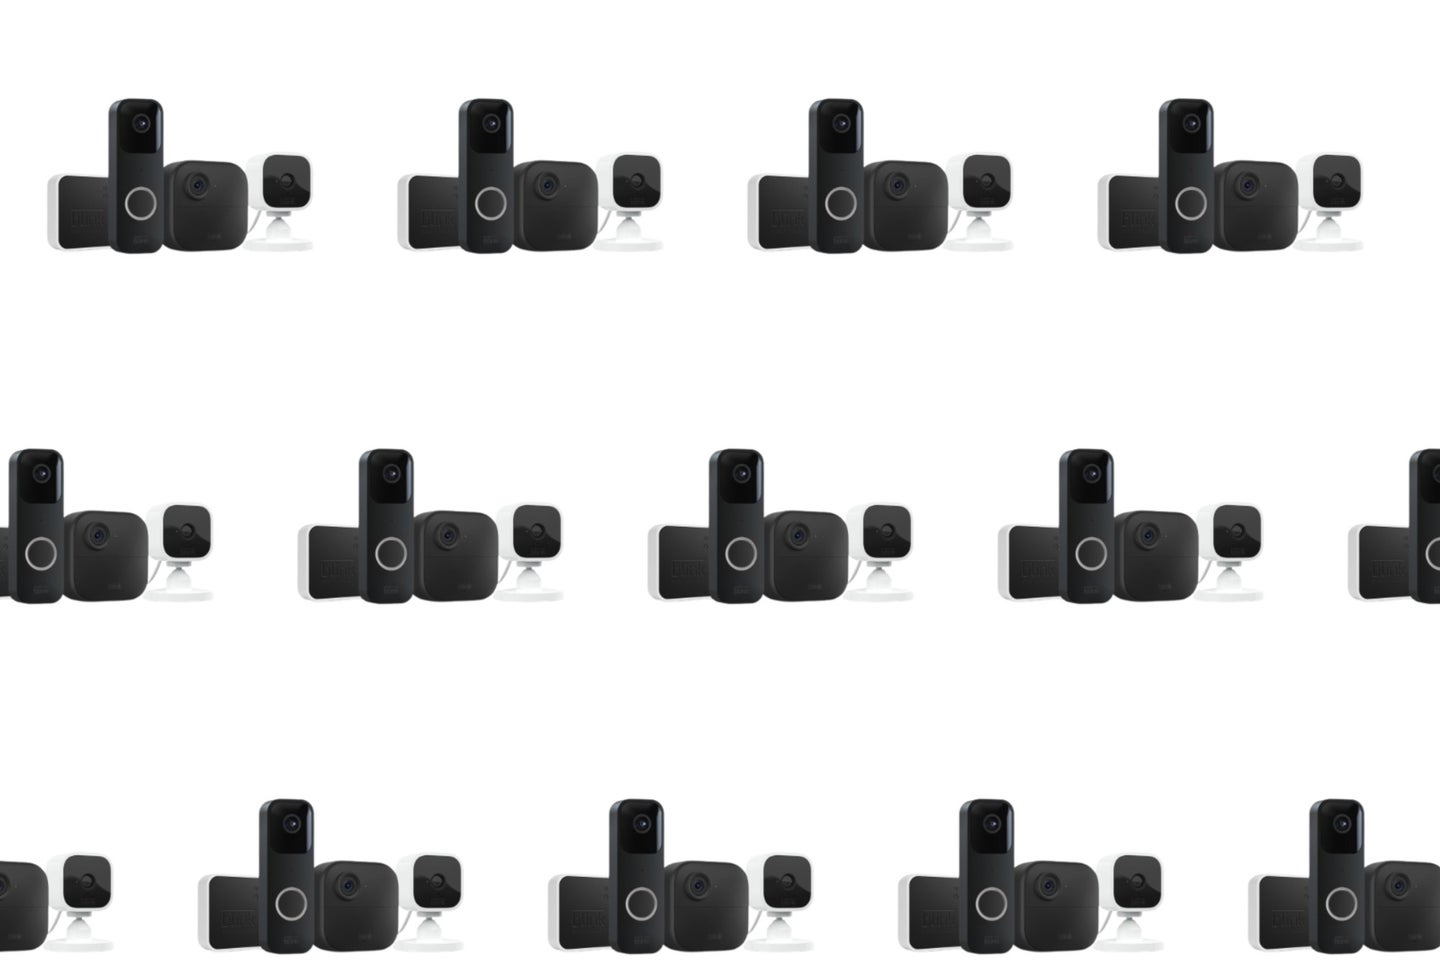 A Blink camera bundle patterned on a plain background